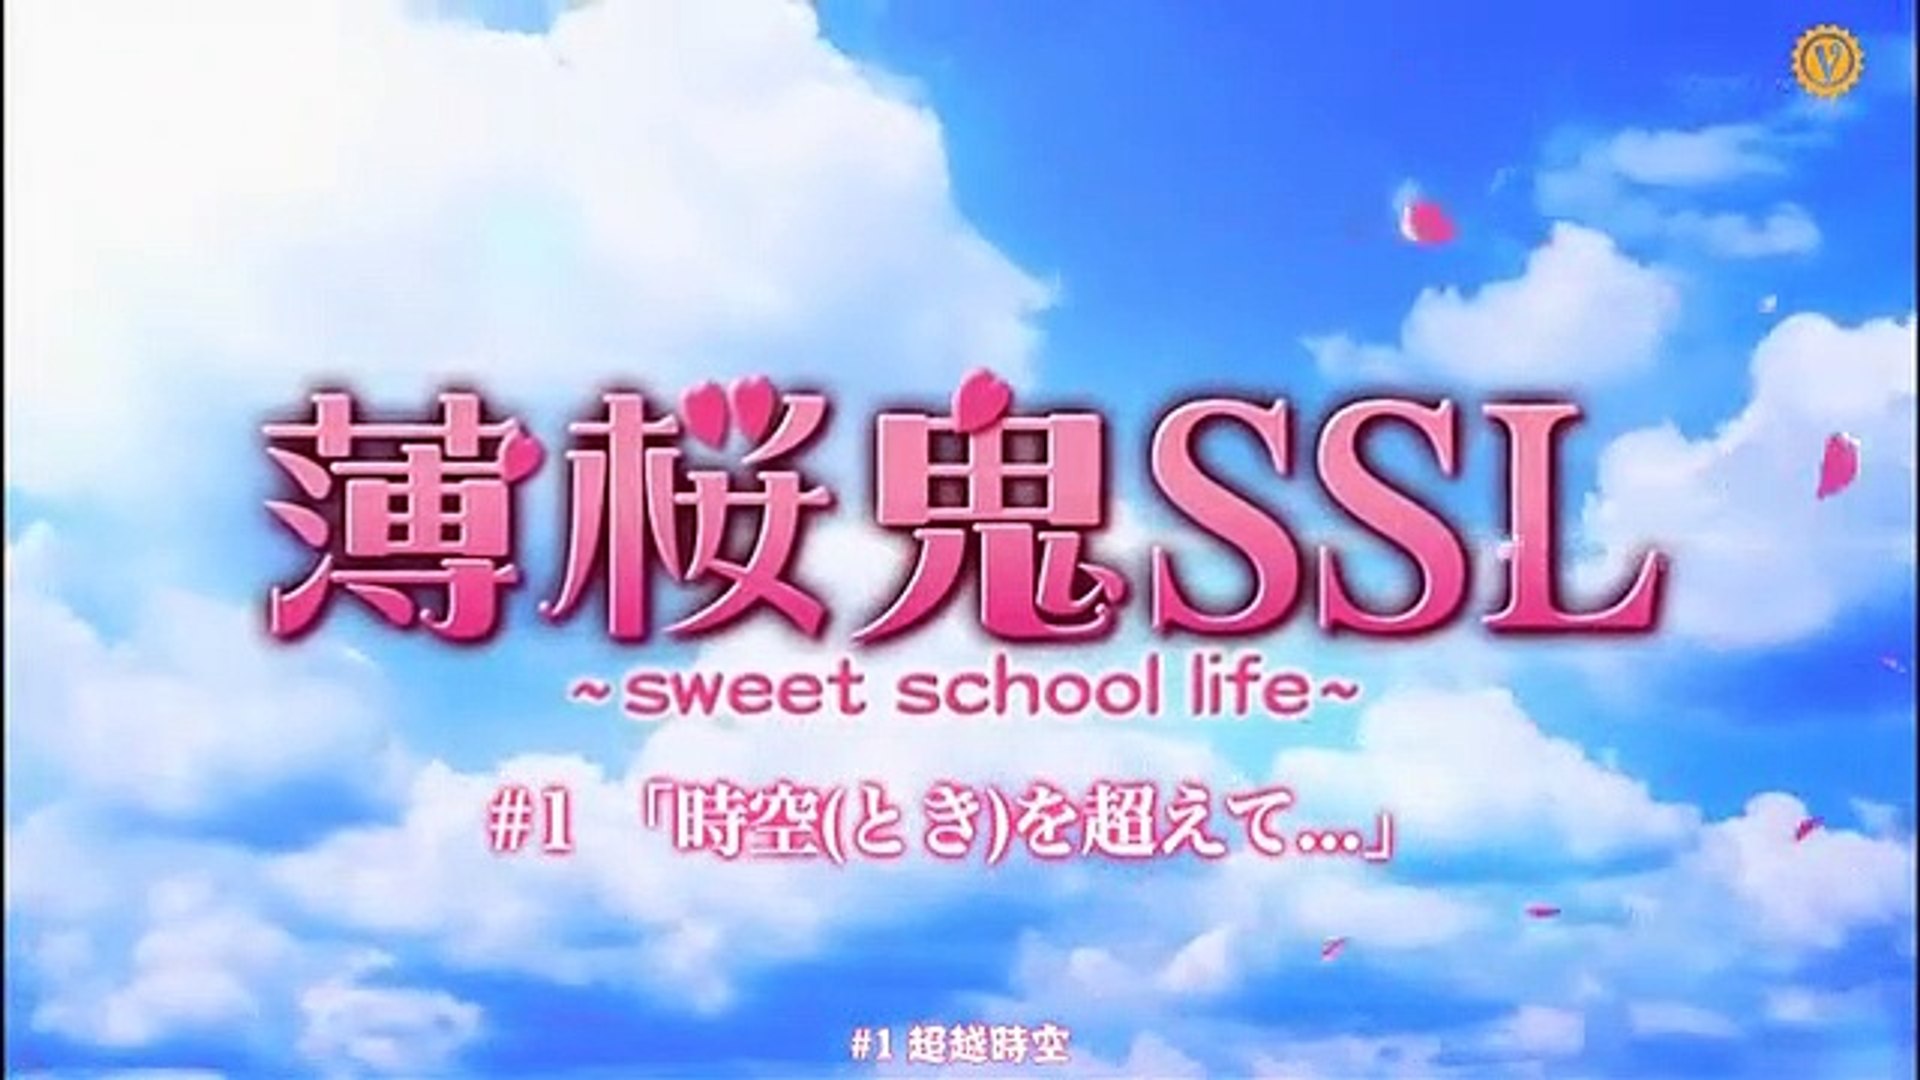 日劇 薄櫻鬼ssl Sweet School Life 真人版01 影片dailymotion